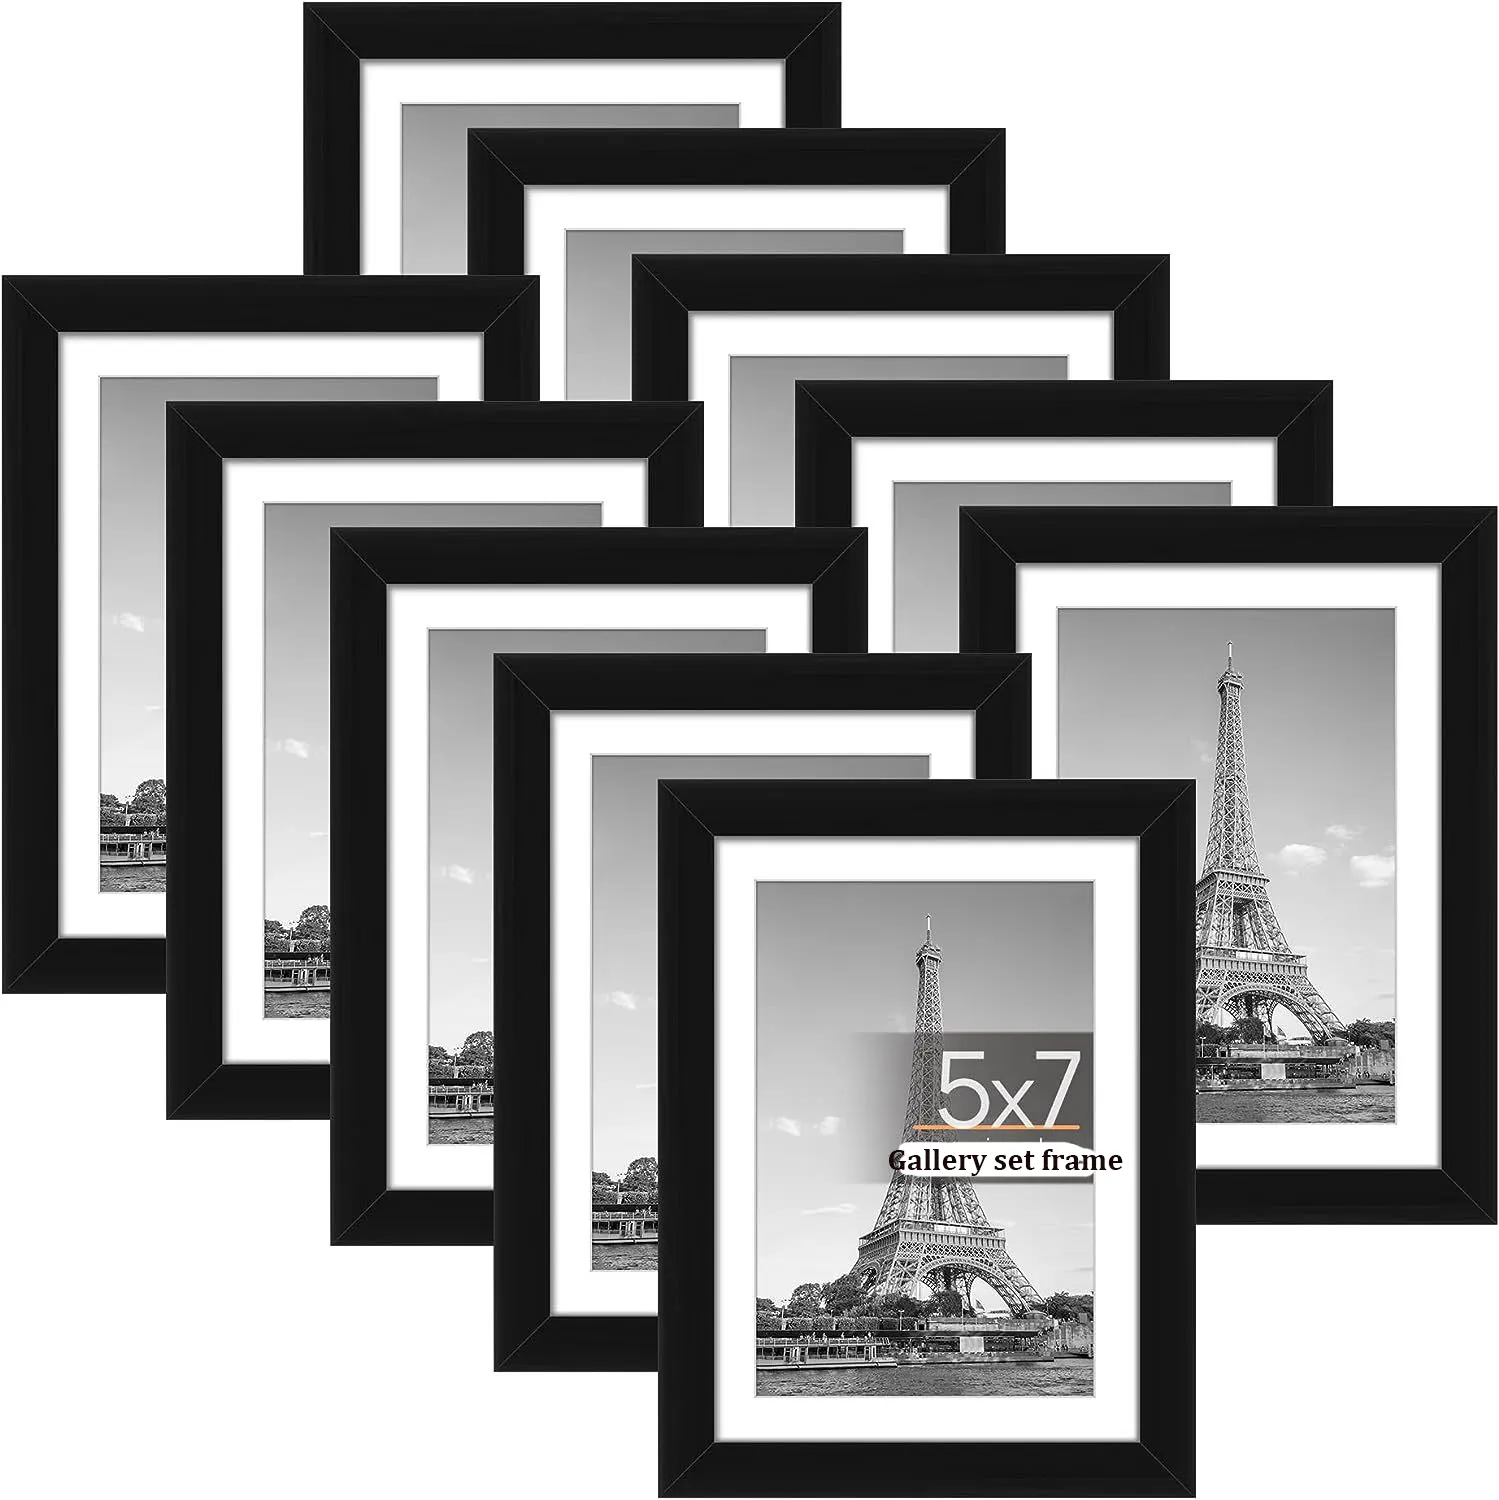 A4 fotorahmen schwarz wand kunst set bilderrahmen schwarz weiß holz souvenir fotorahmen